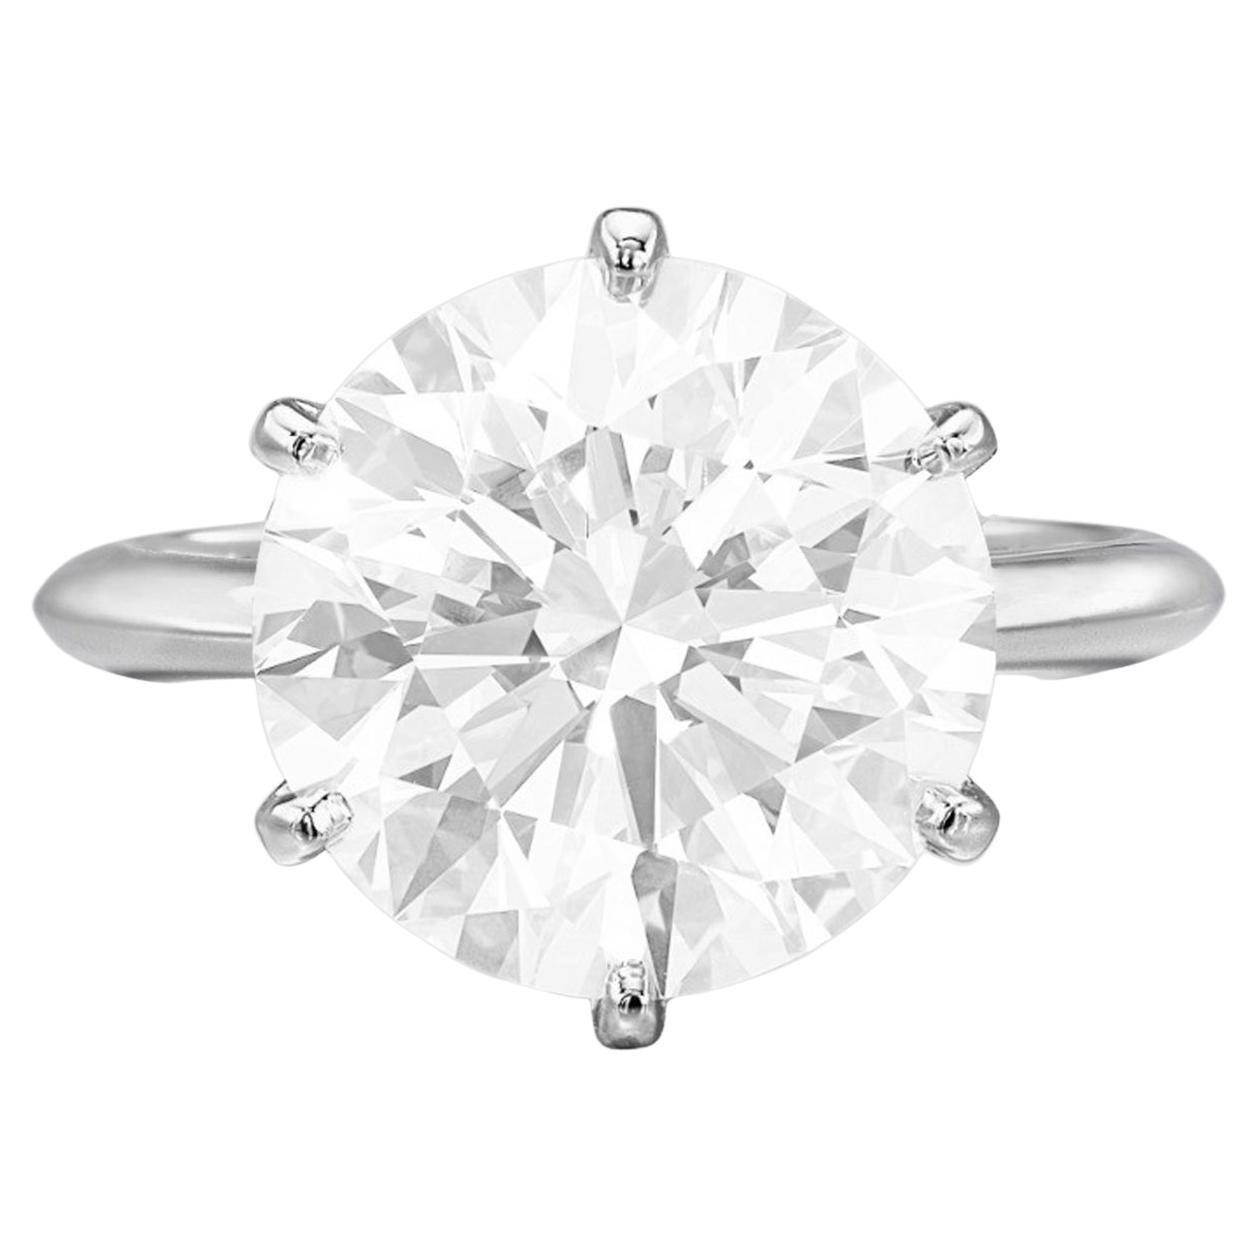 Tiffany & Co. 3.78 Karat Platin Diamant-Verlobungsring mit rundem Brillantschliff